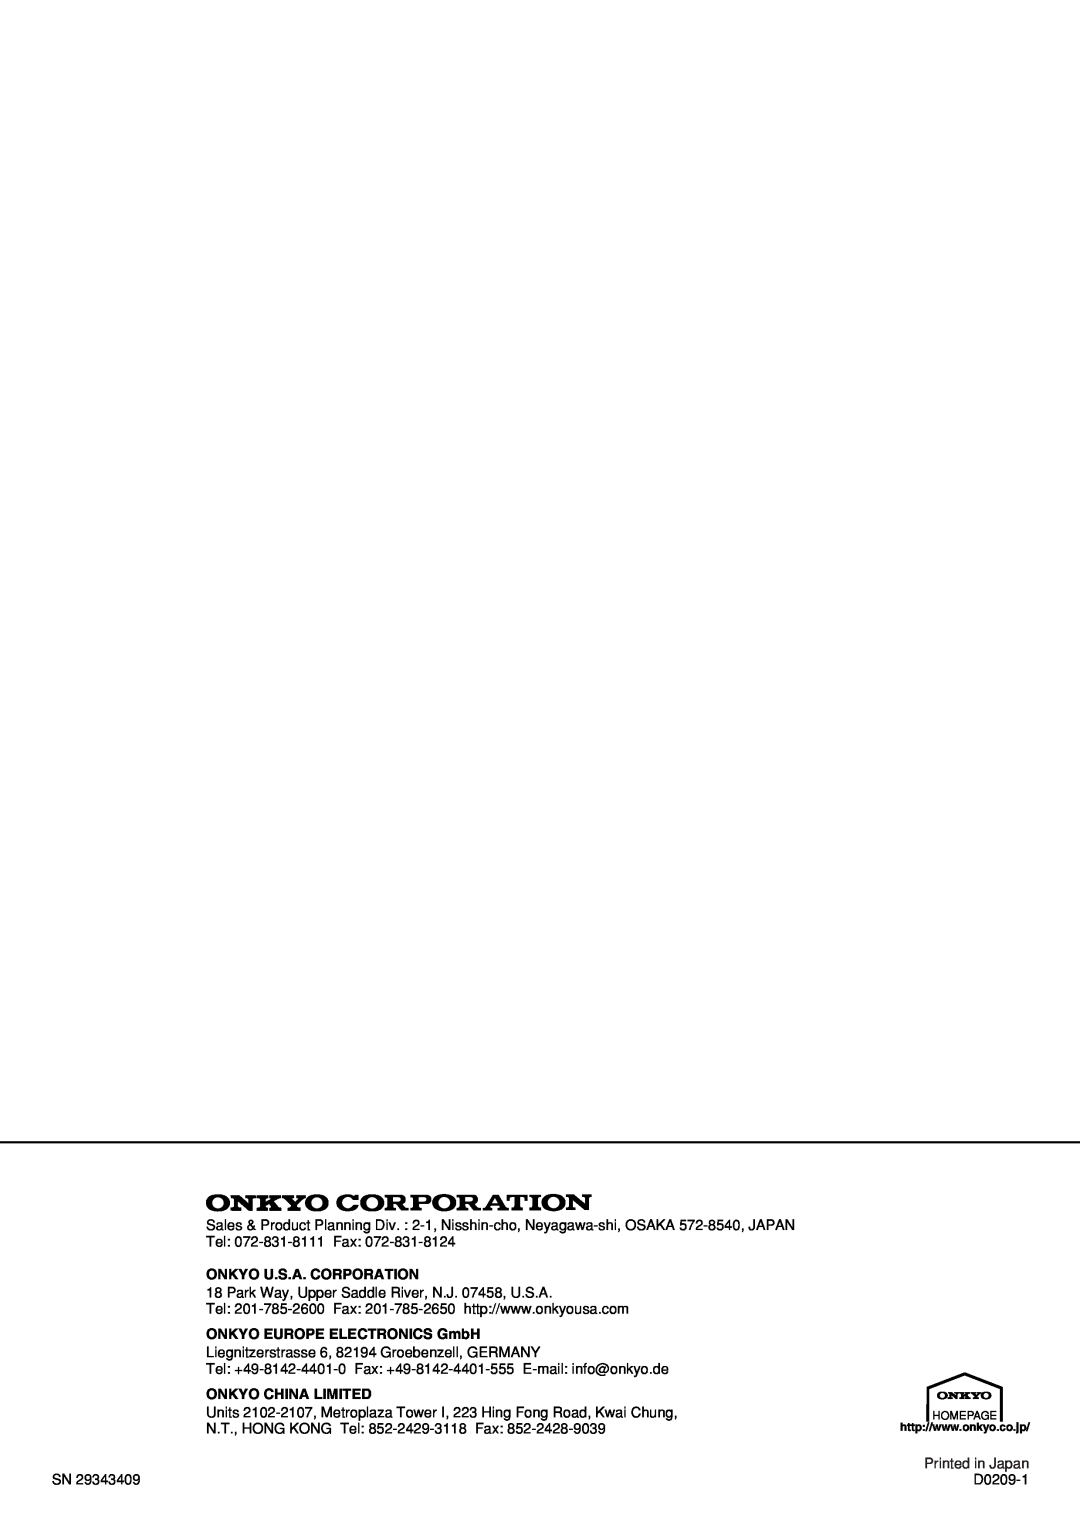 Onkyo TX-NR900E instruction manual Onkyo U.S.A. Corporation, ONKYO EUROPE ELECTRONICS GmbH, Onkyo China Limited 